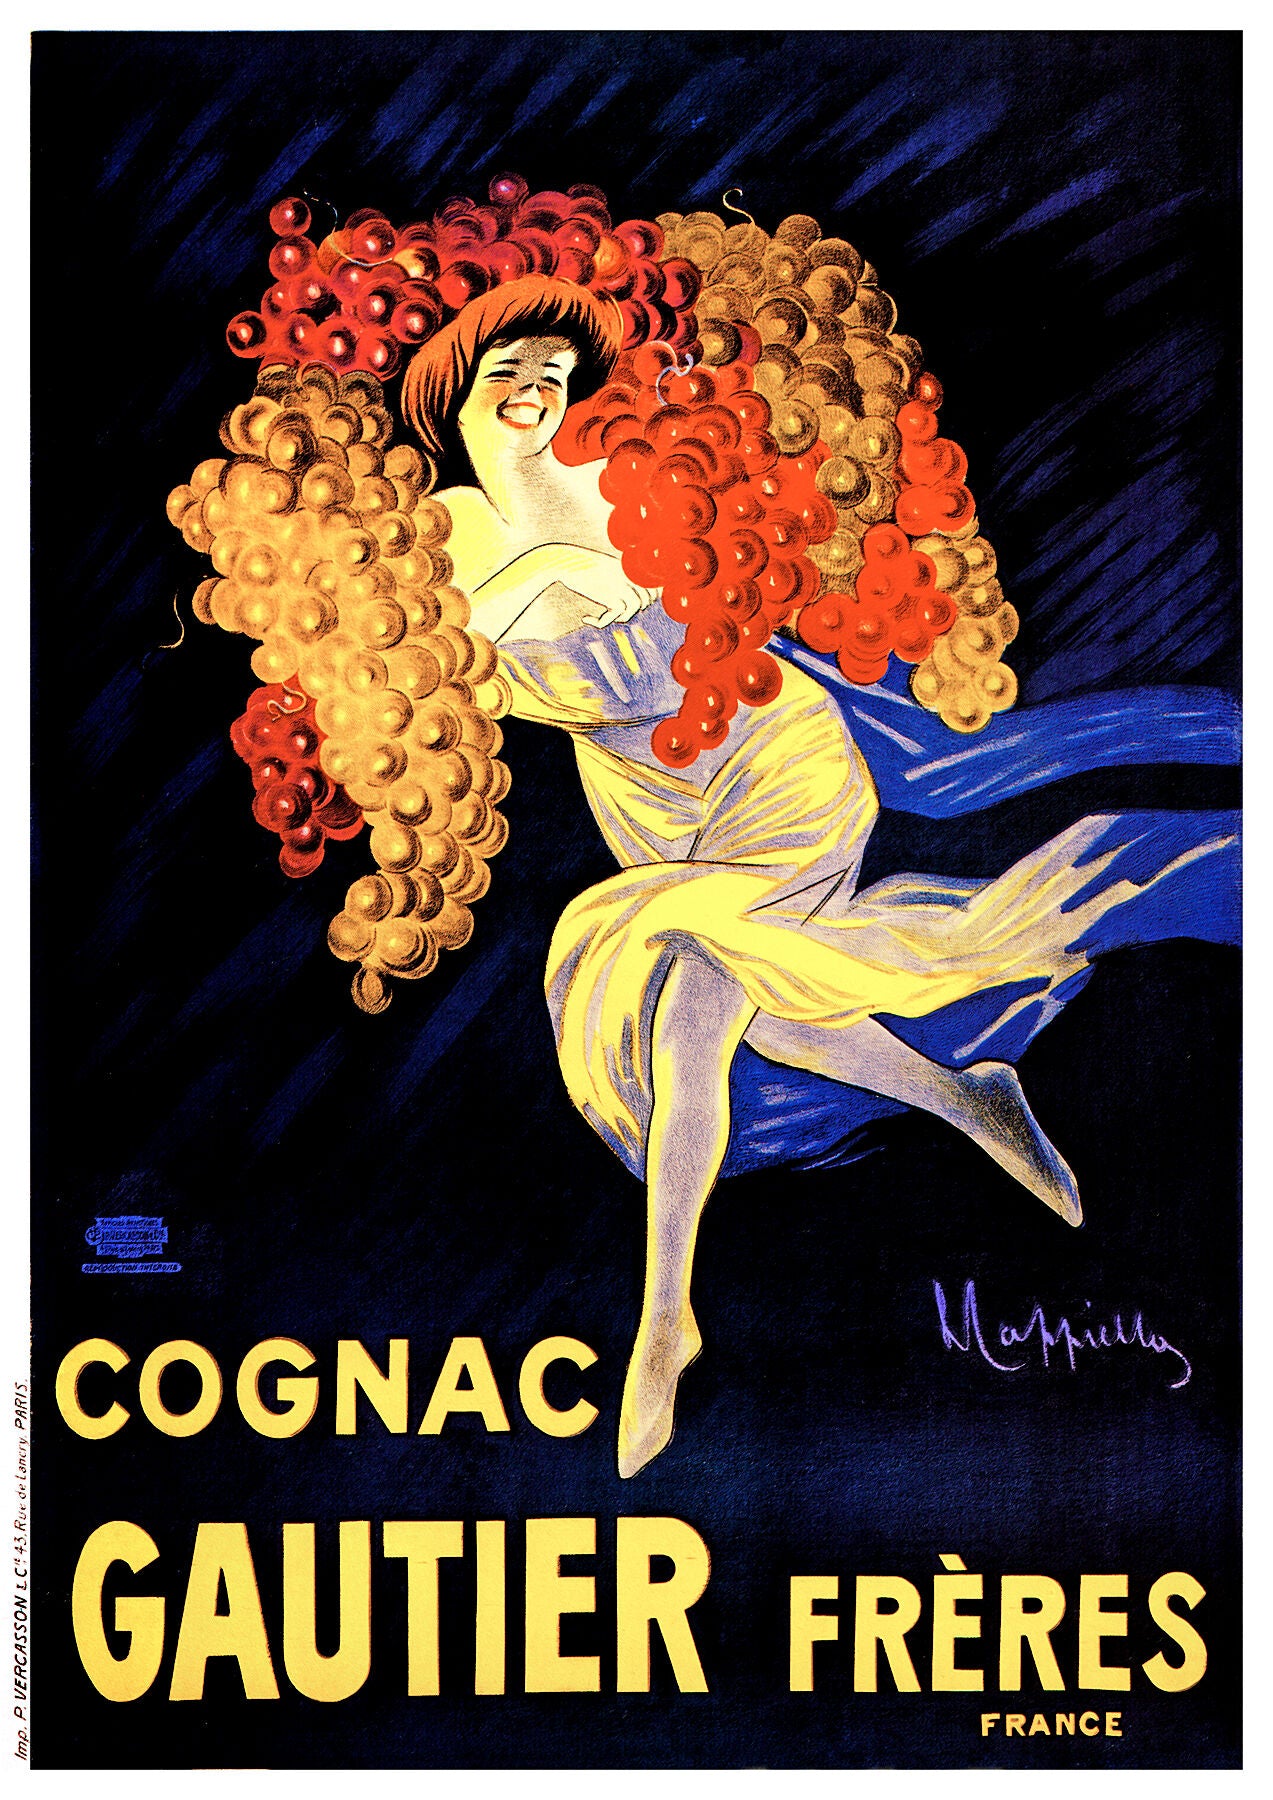 Cognac Gautier Frères poster by Leonetto Cappiello